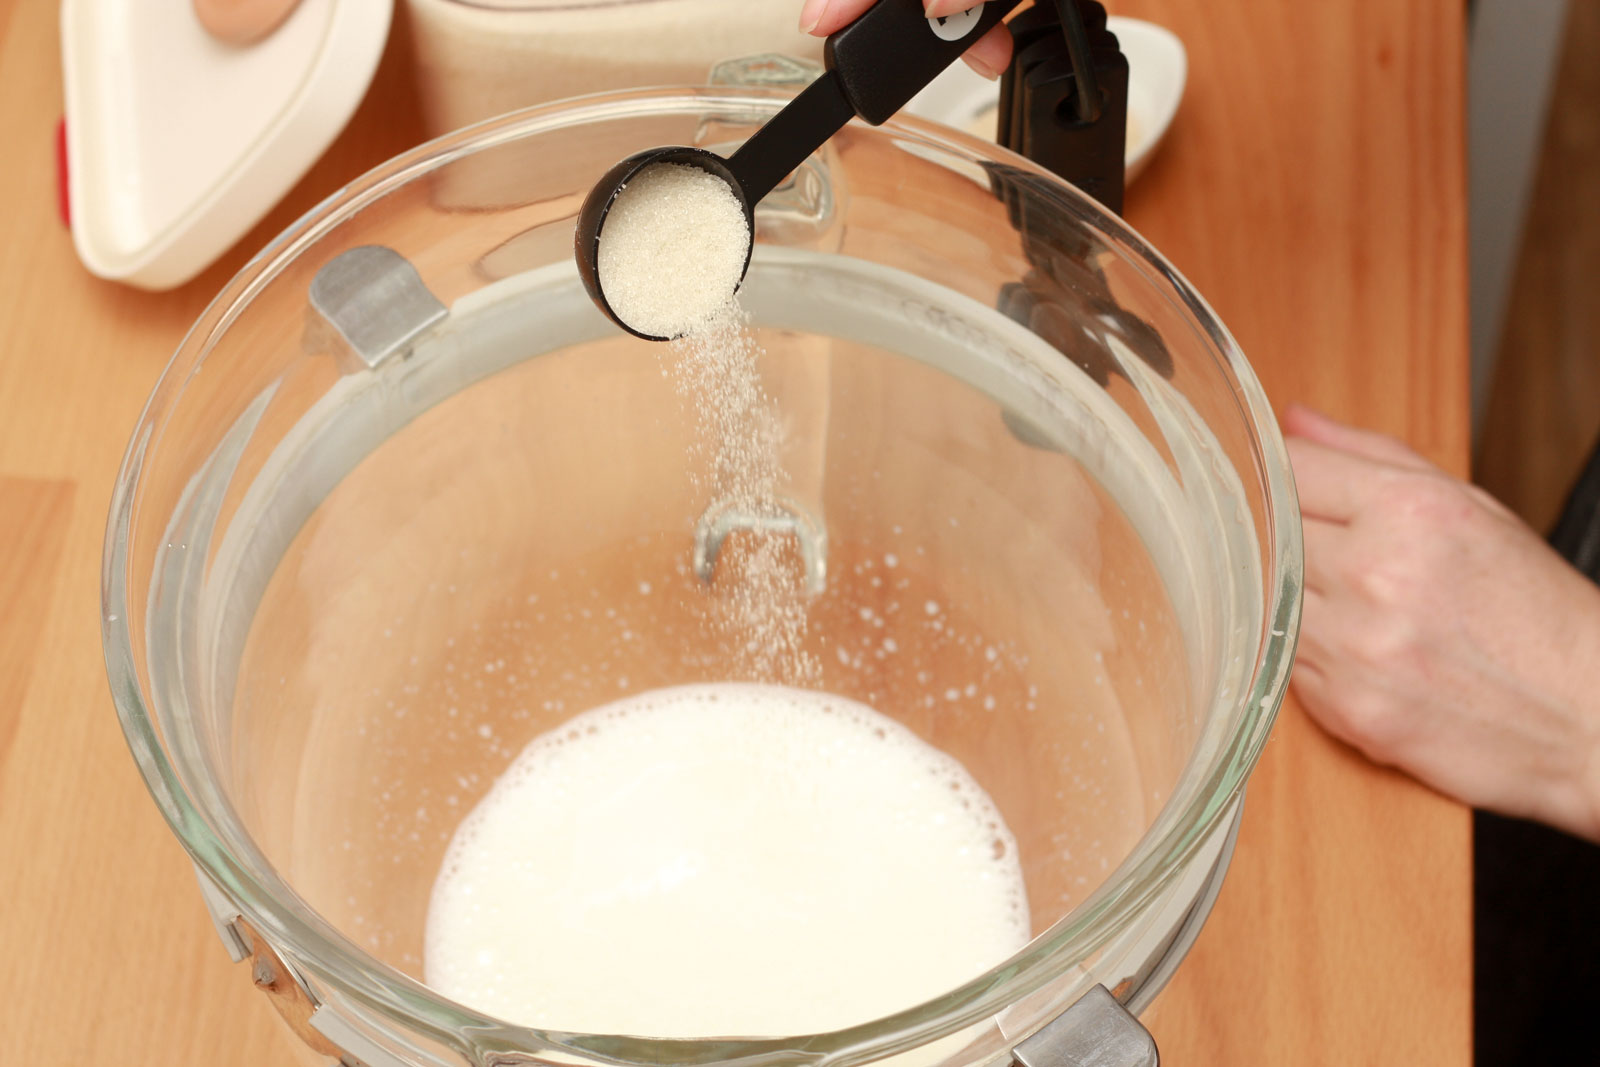 Alyssa pours granulated sugar into a bowl of warm milk